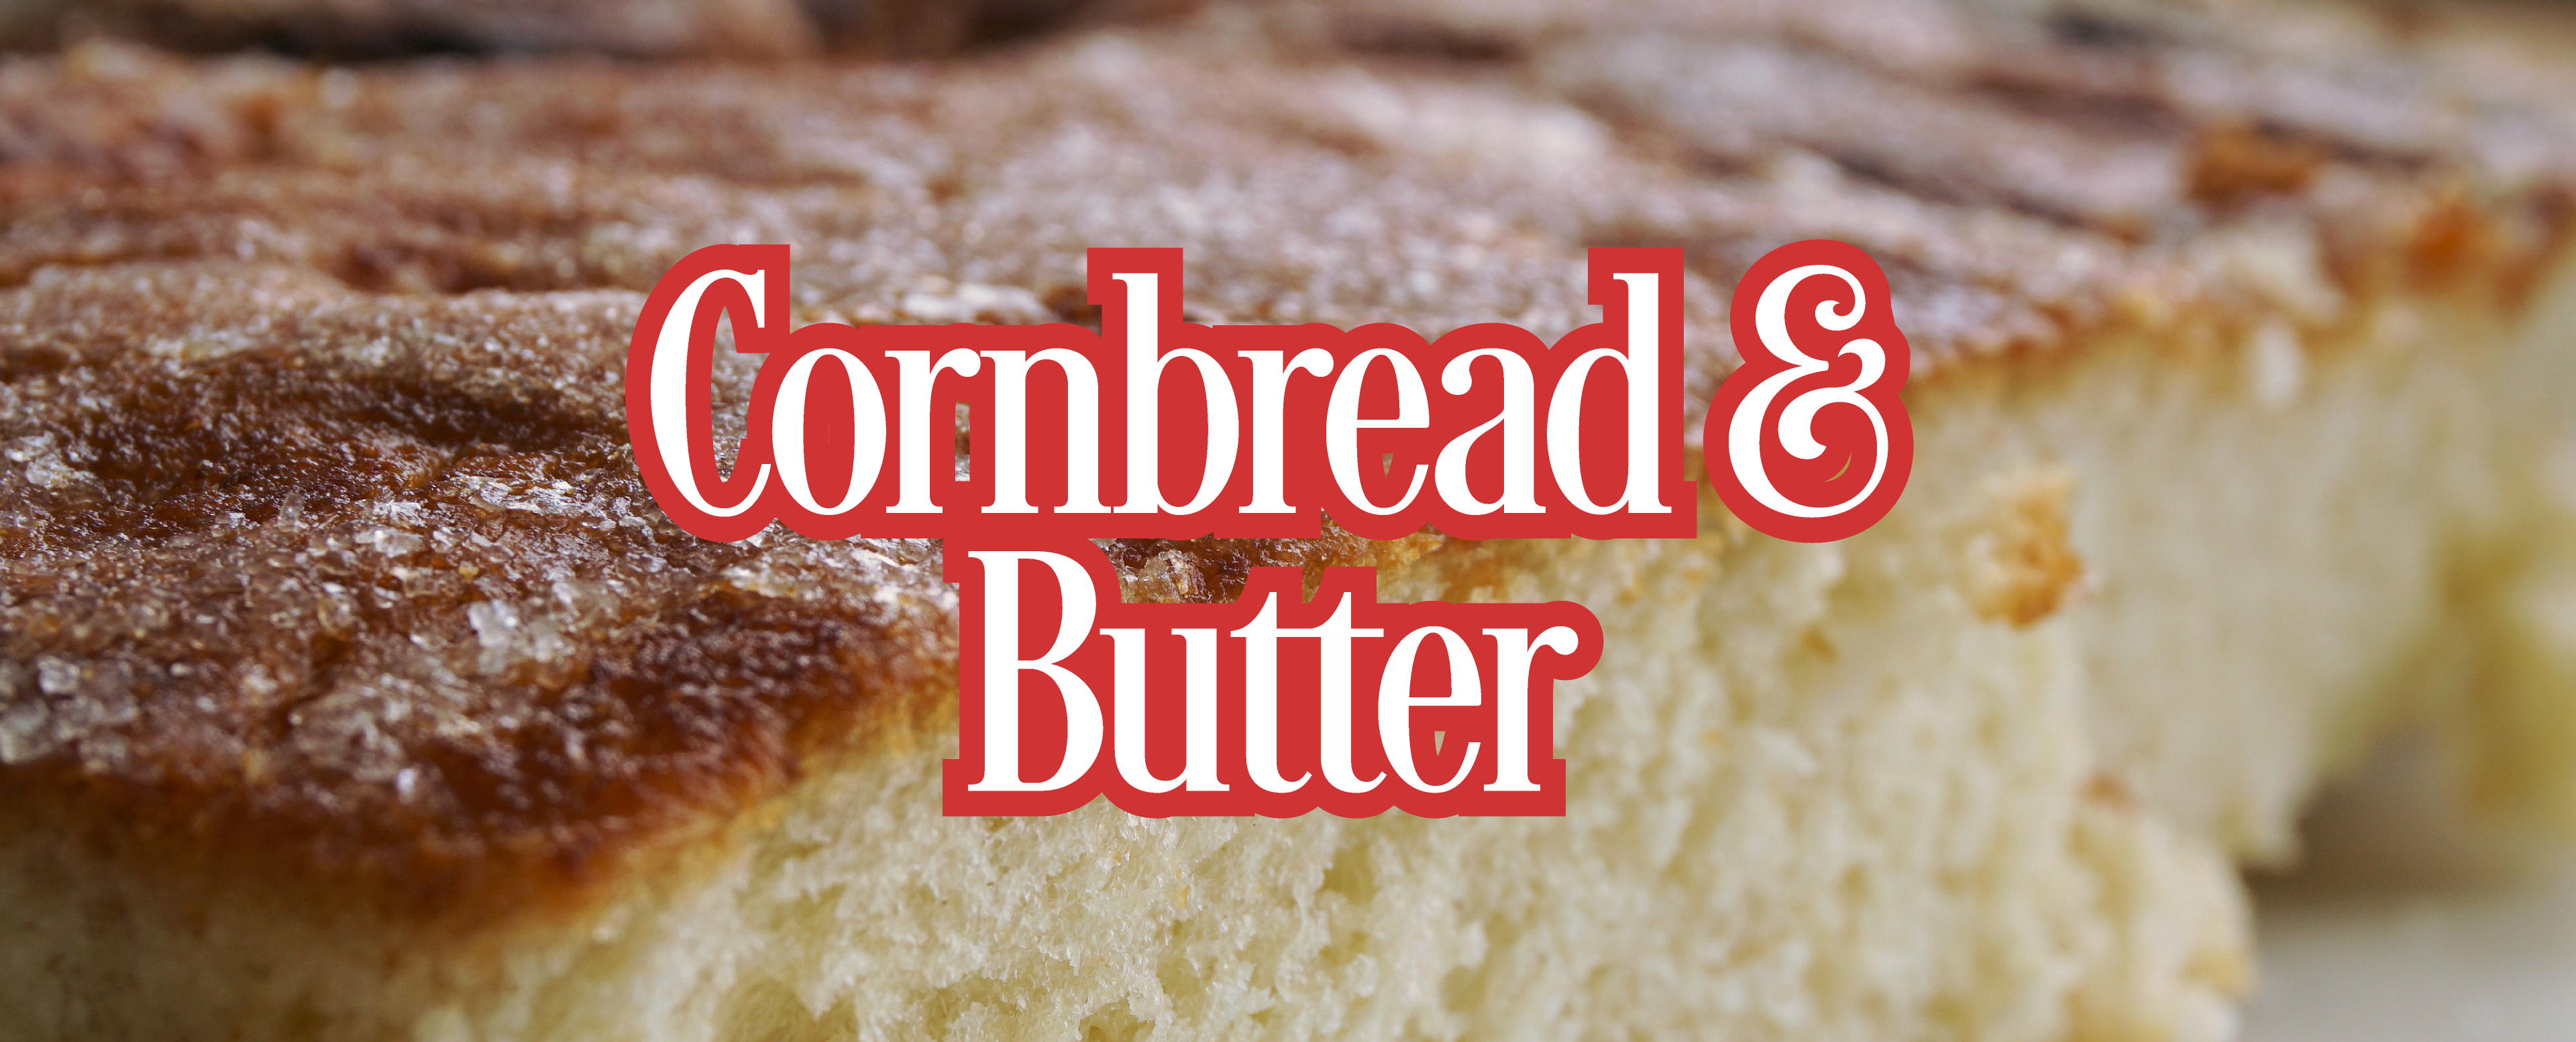 Cornbread and Butter